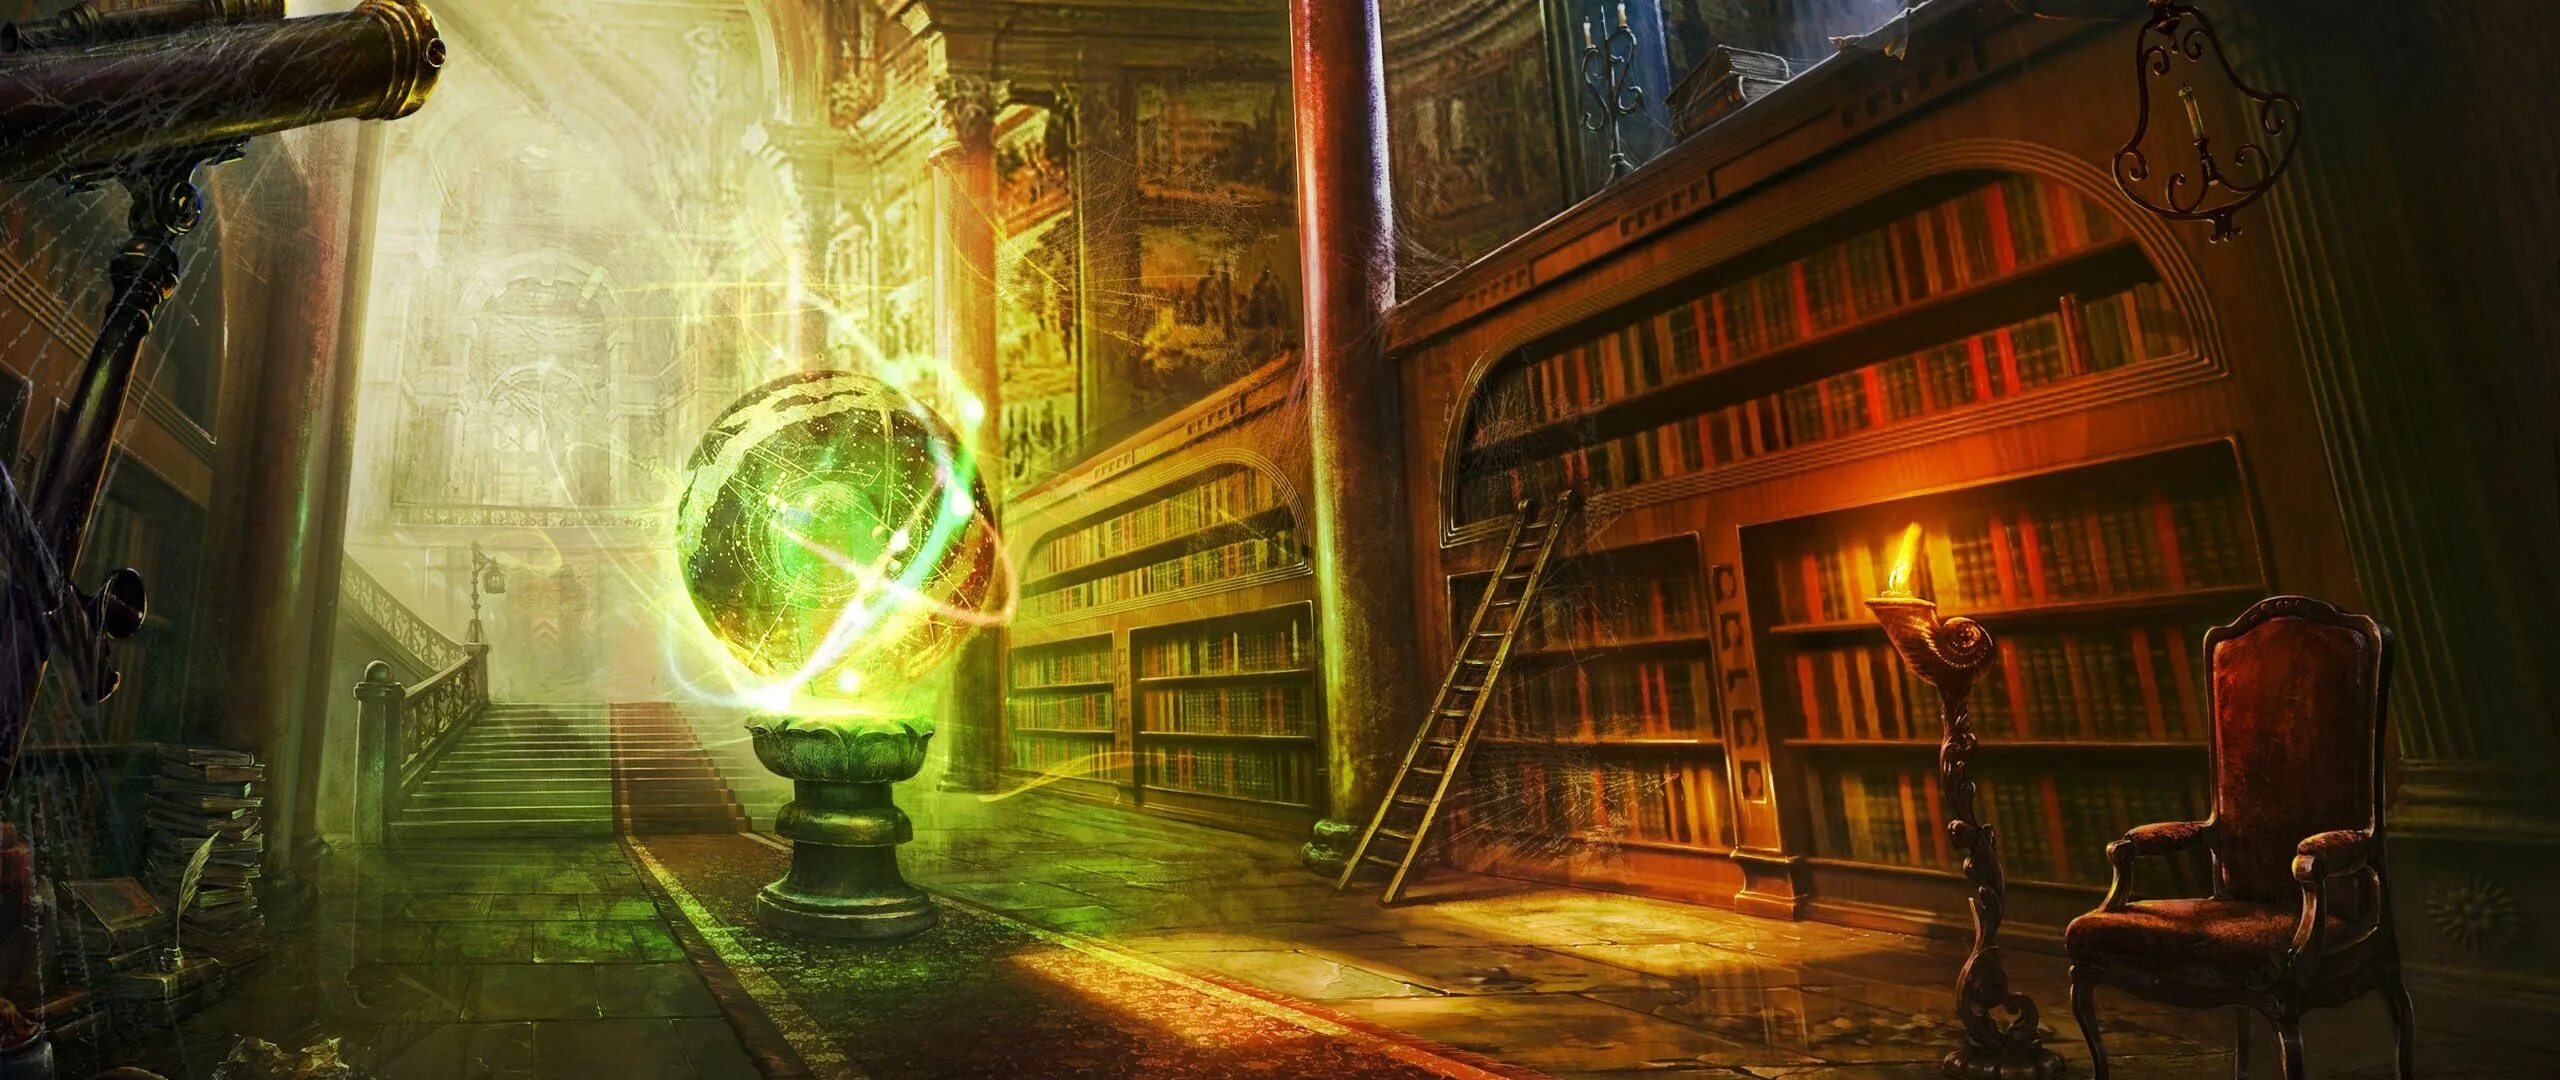 Fantasy worlds электронная библиотека. Библиотека арт. Сказочная библиотека. Библиотека фон. Библиотека фэнтези.